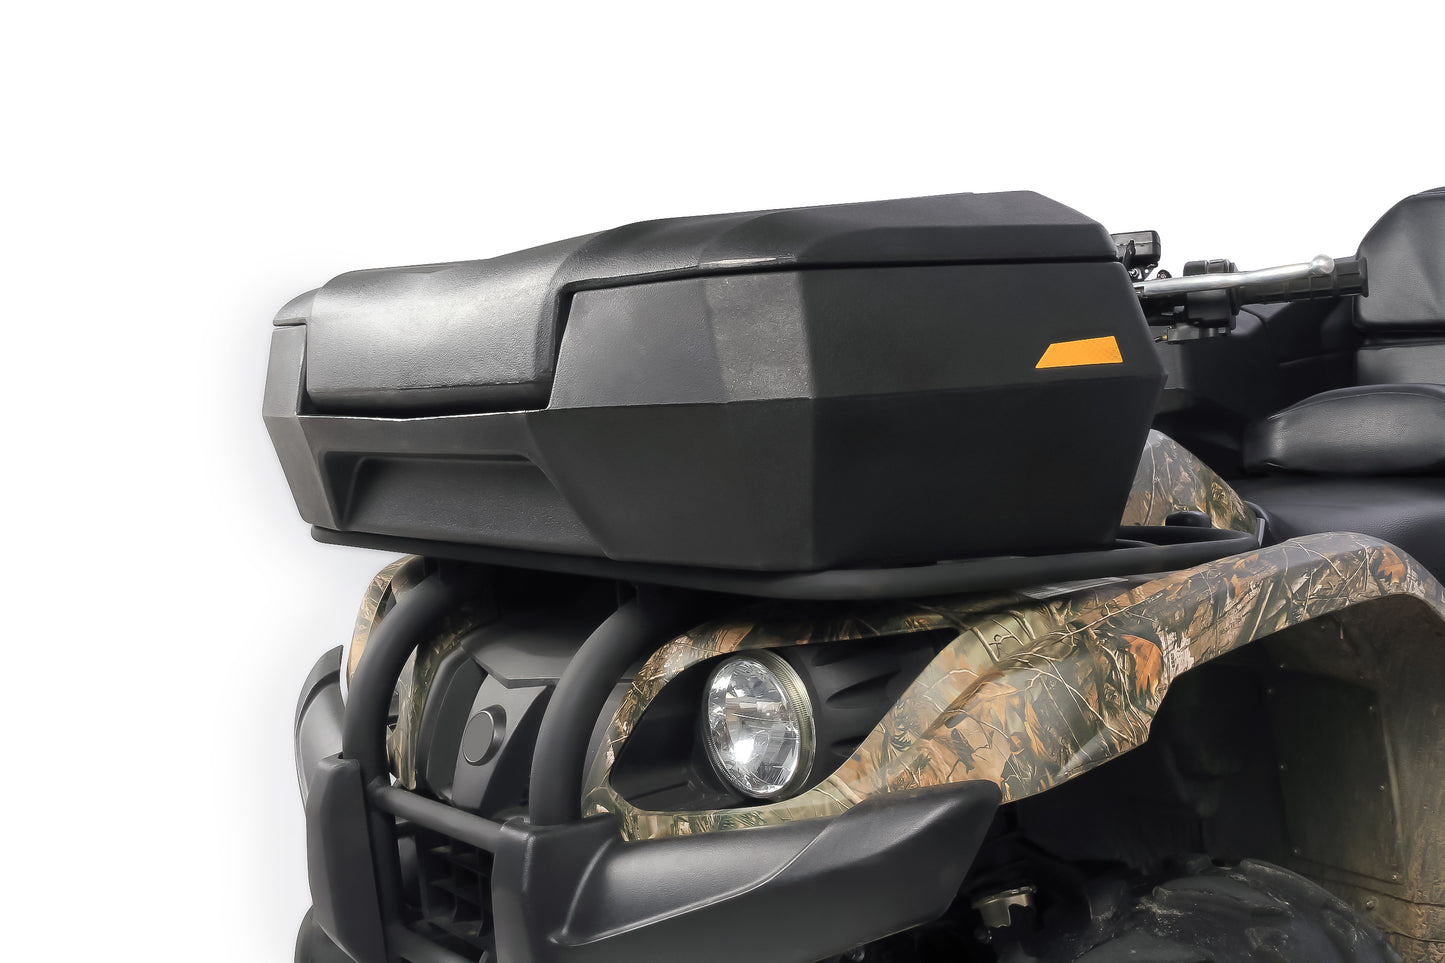 Black Boar ATV Front Storage Box